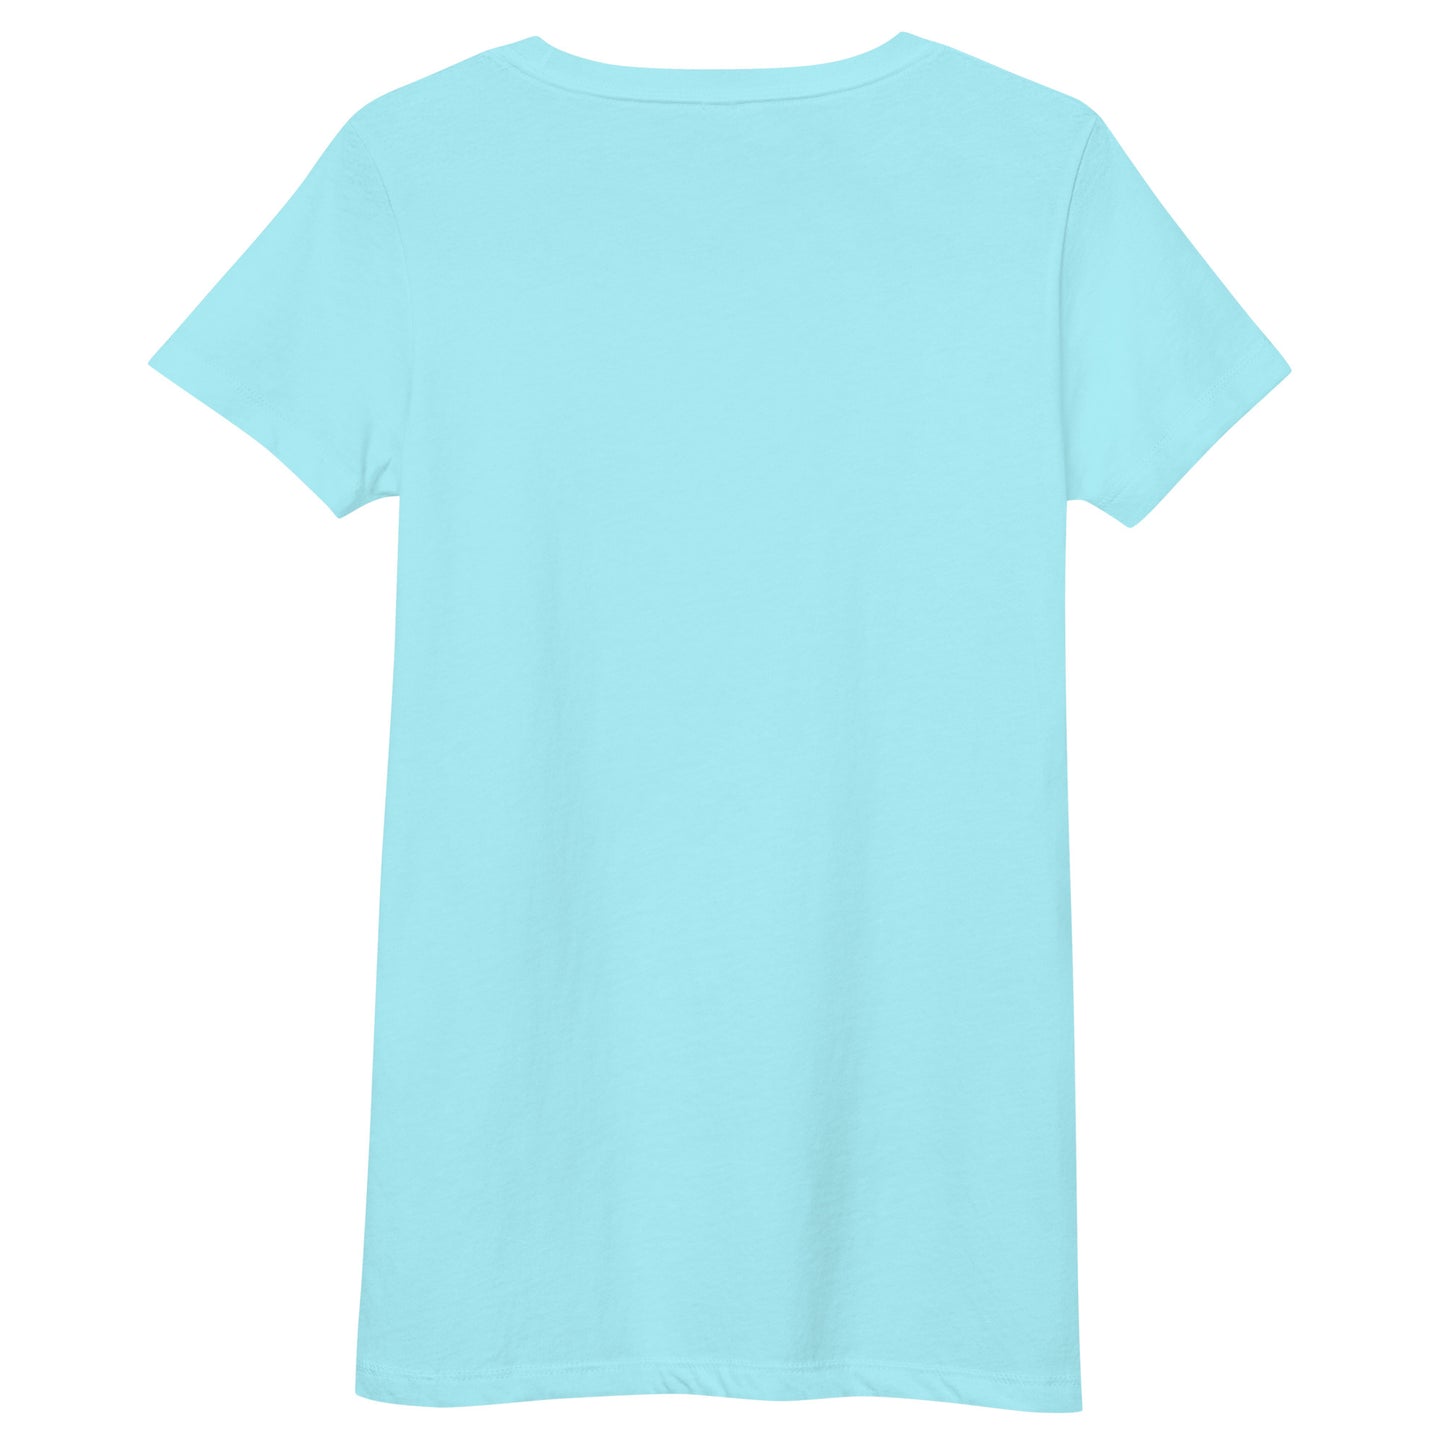 Flamingo Life® Cancun Blue Women’s fitted t-shirt